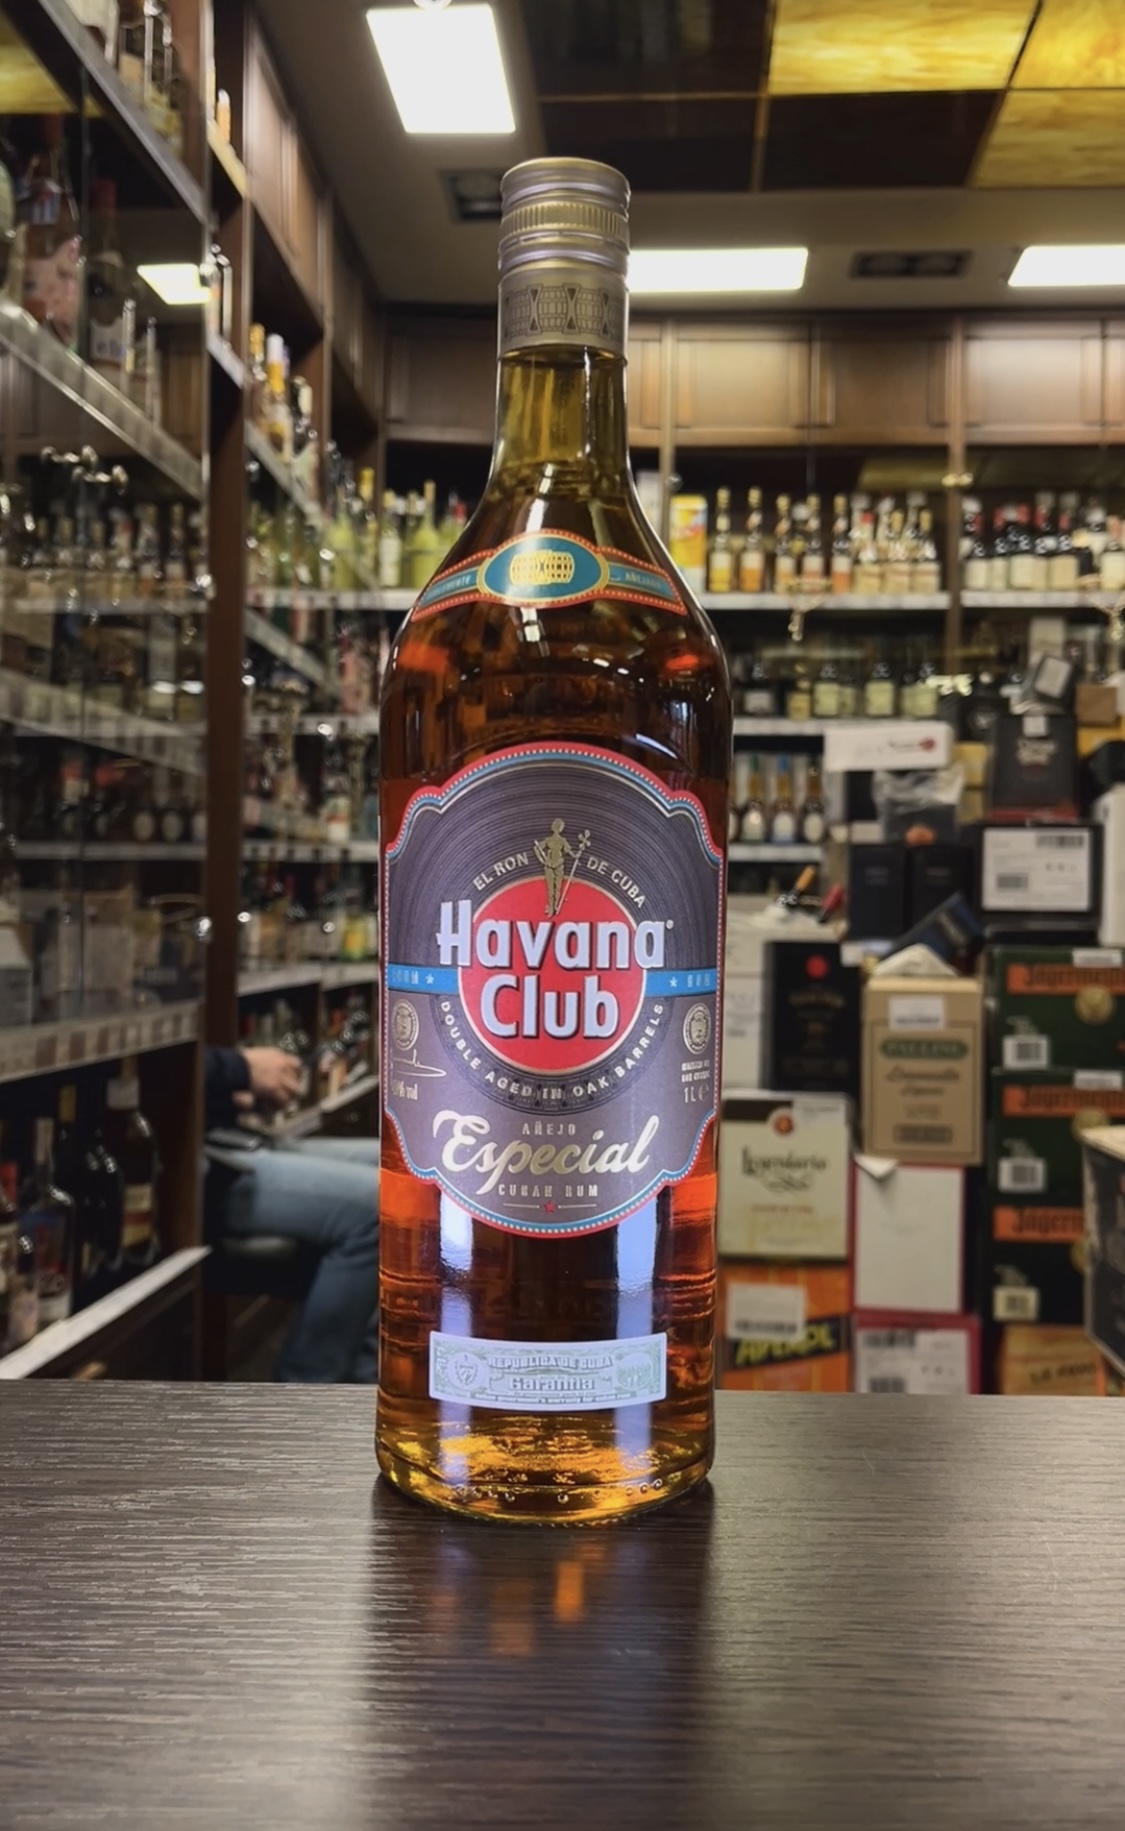 Havana Club Anejo Especial Ром Гавана Клуб Аньехо Эспесиаль 1л